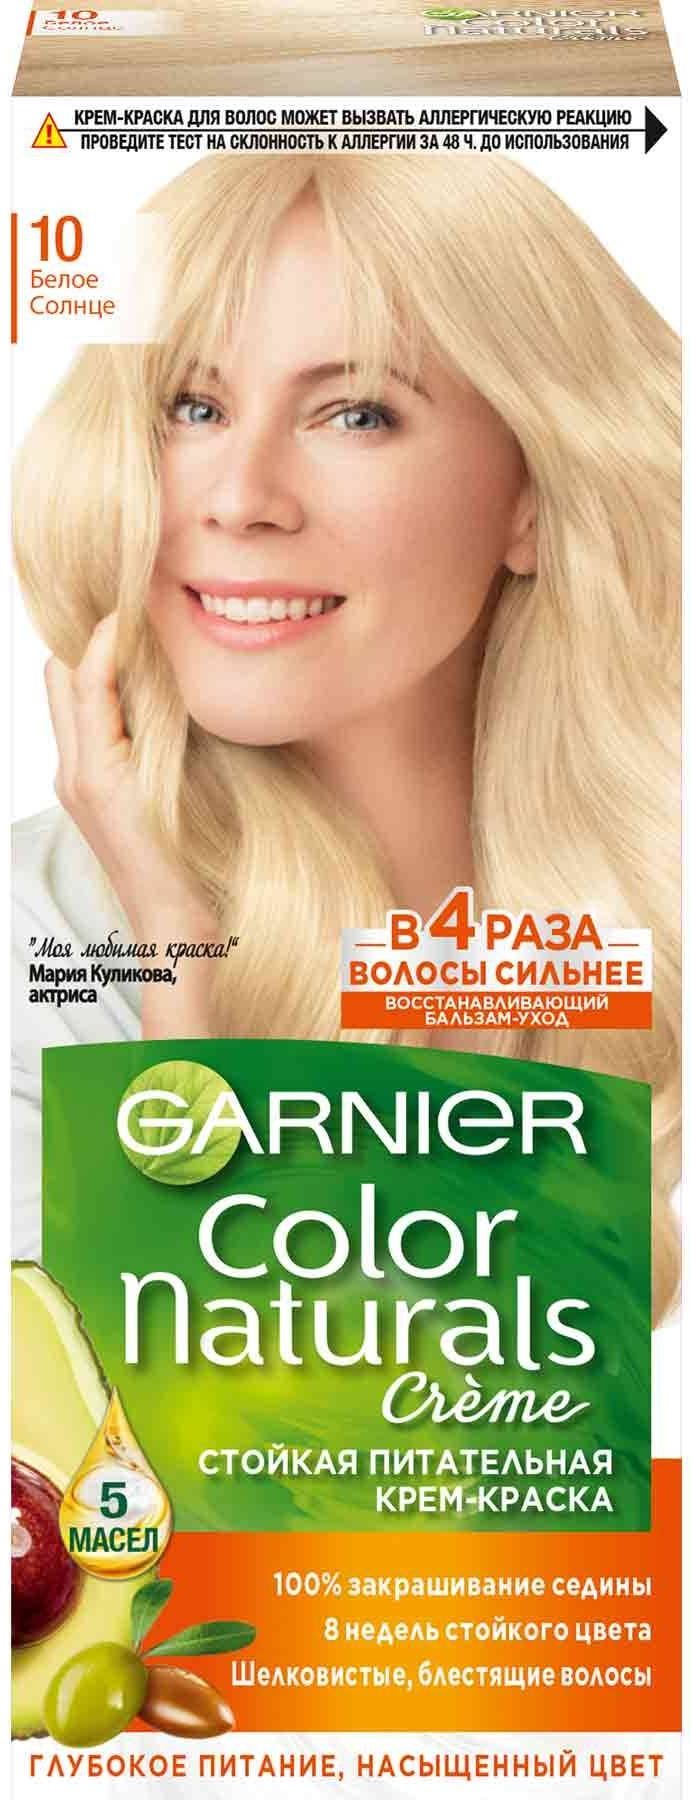 Garnier Color Naturals: одна из лучших красок